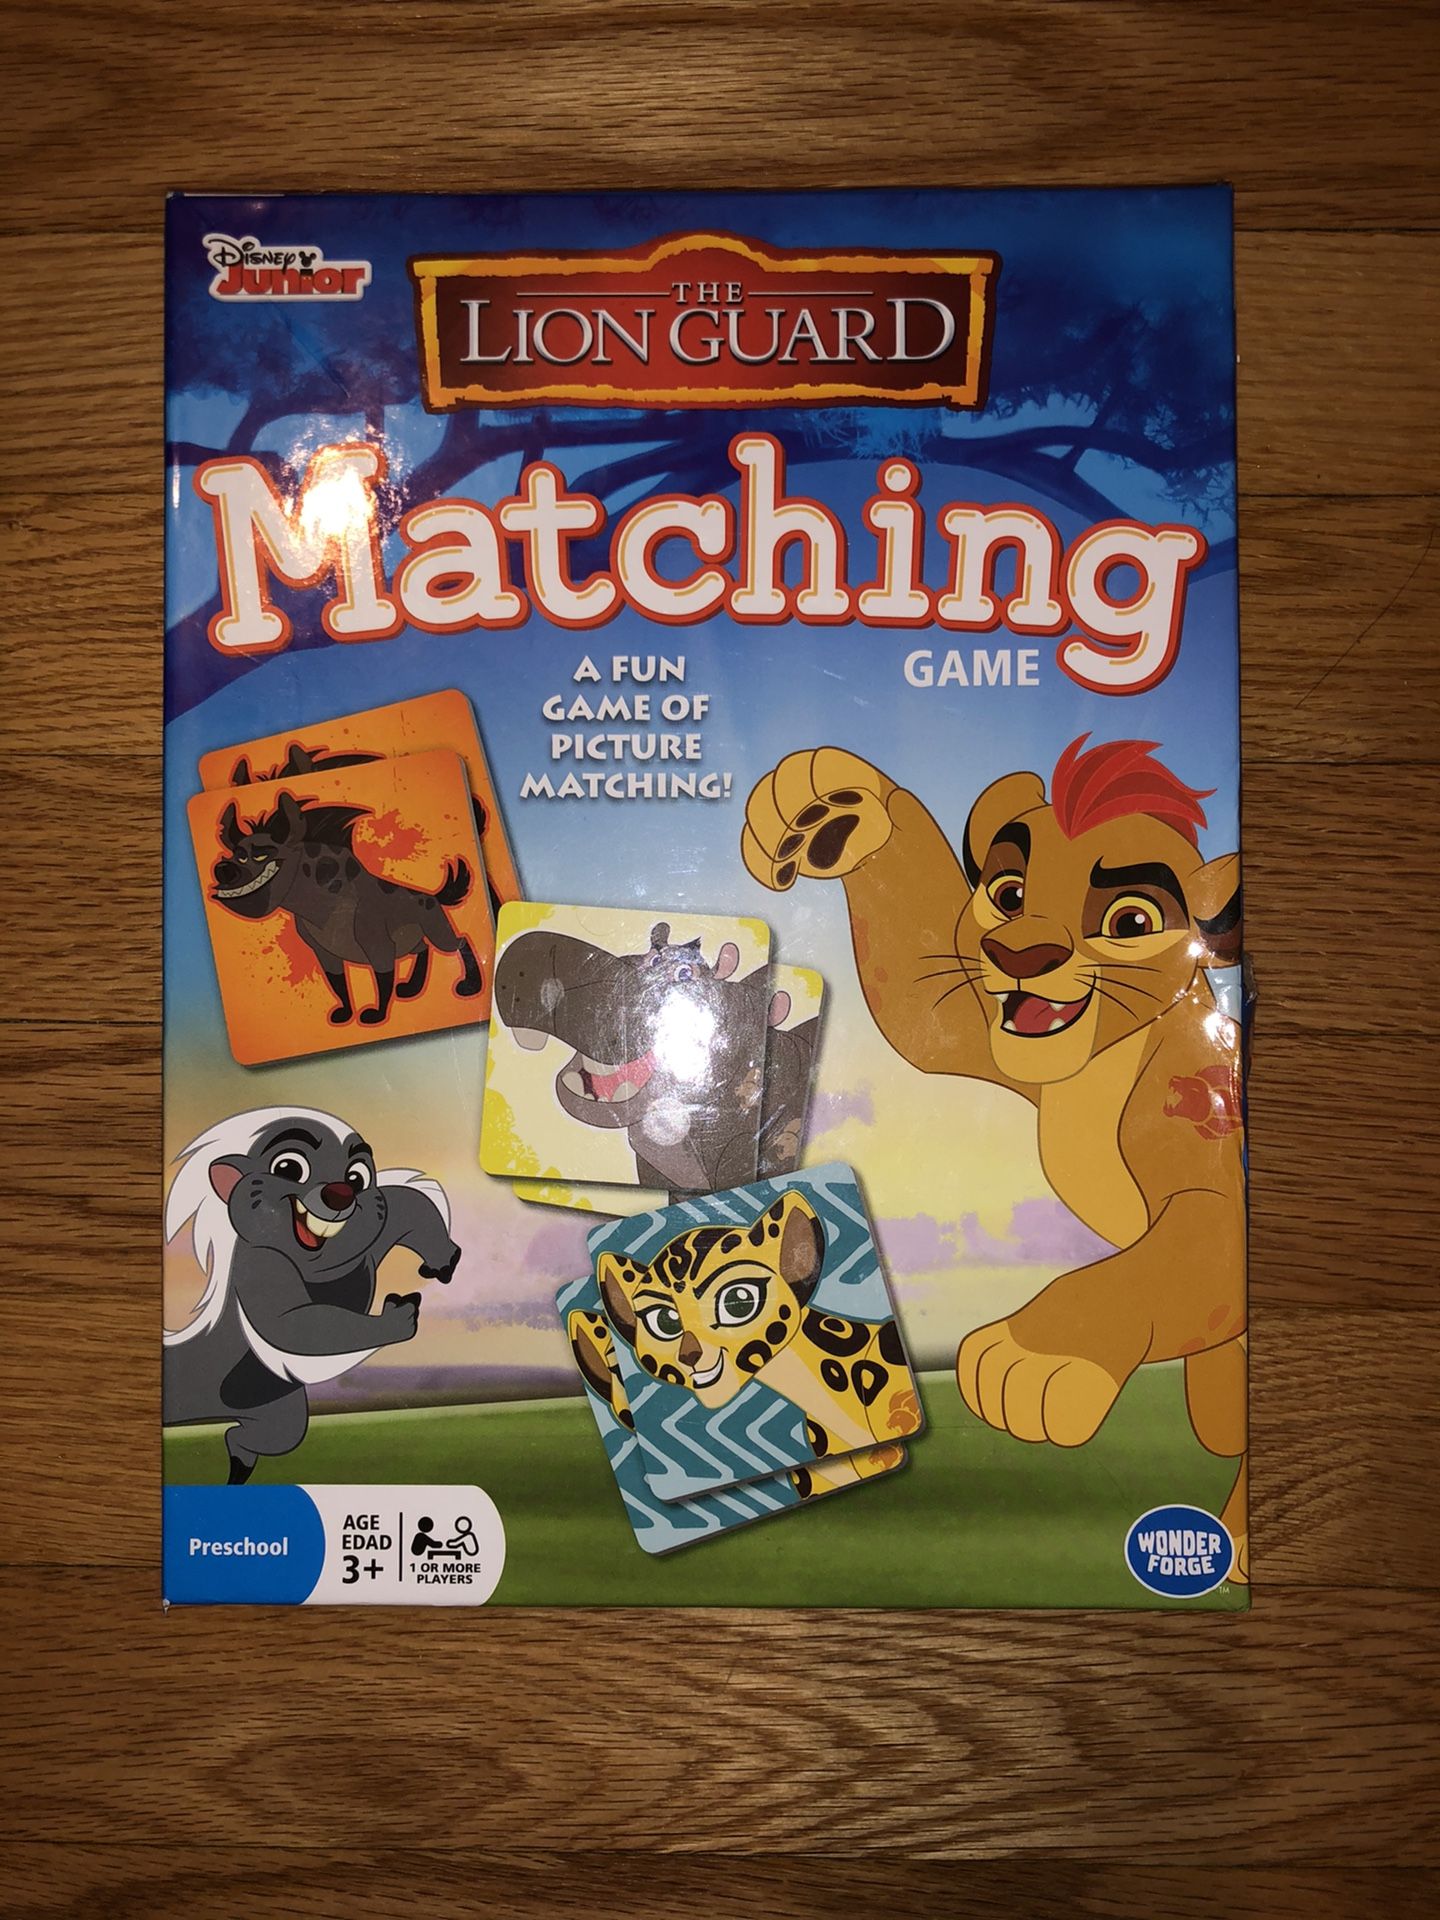 Lion Guard Matching Game